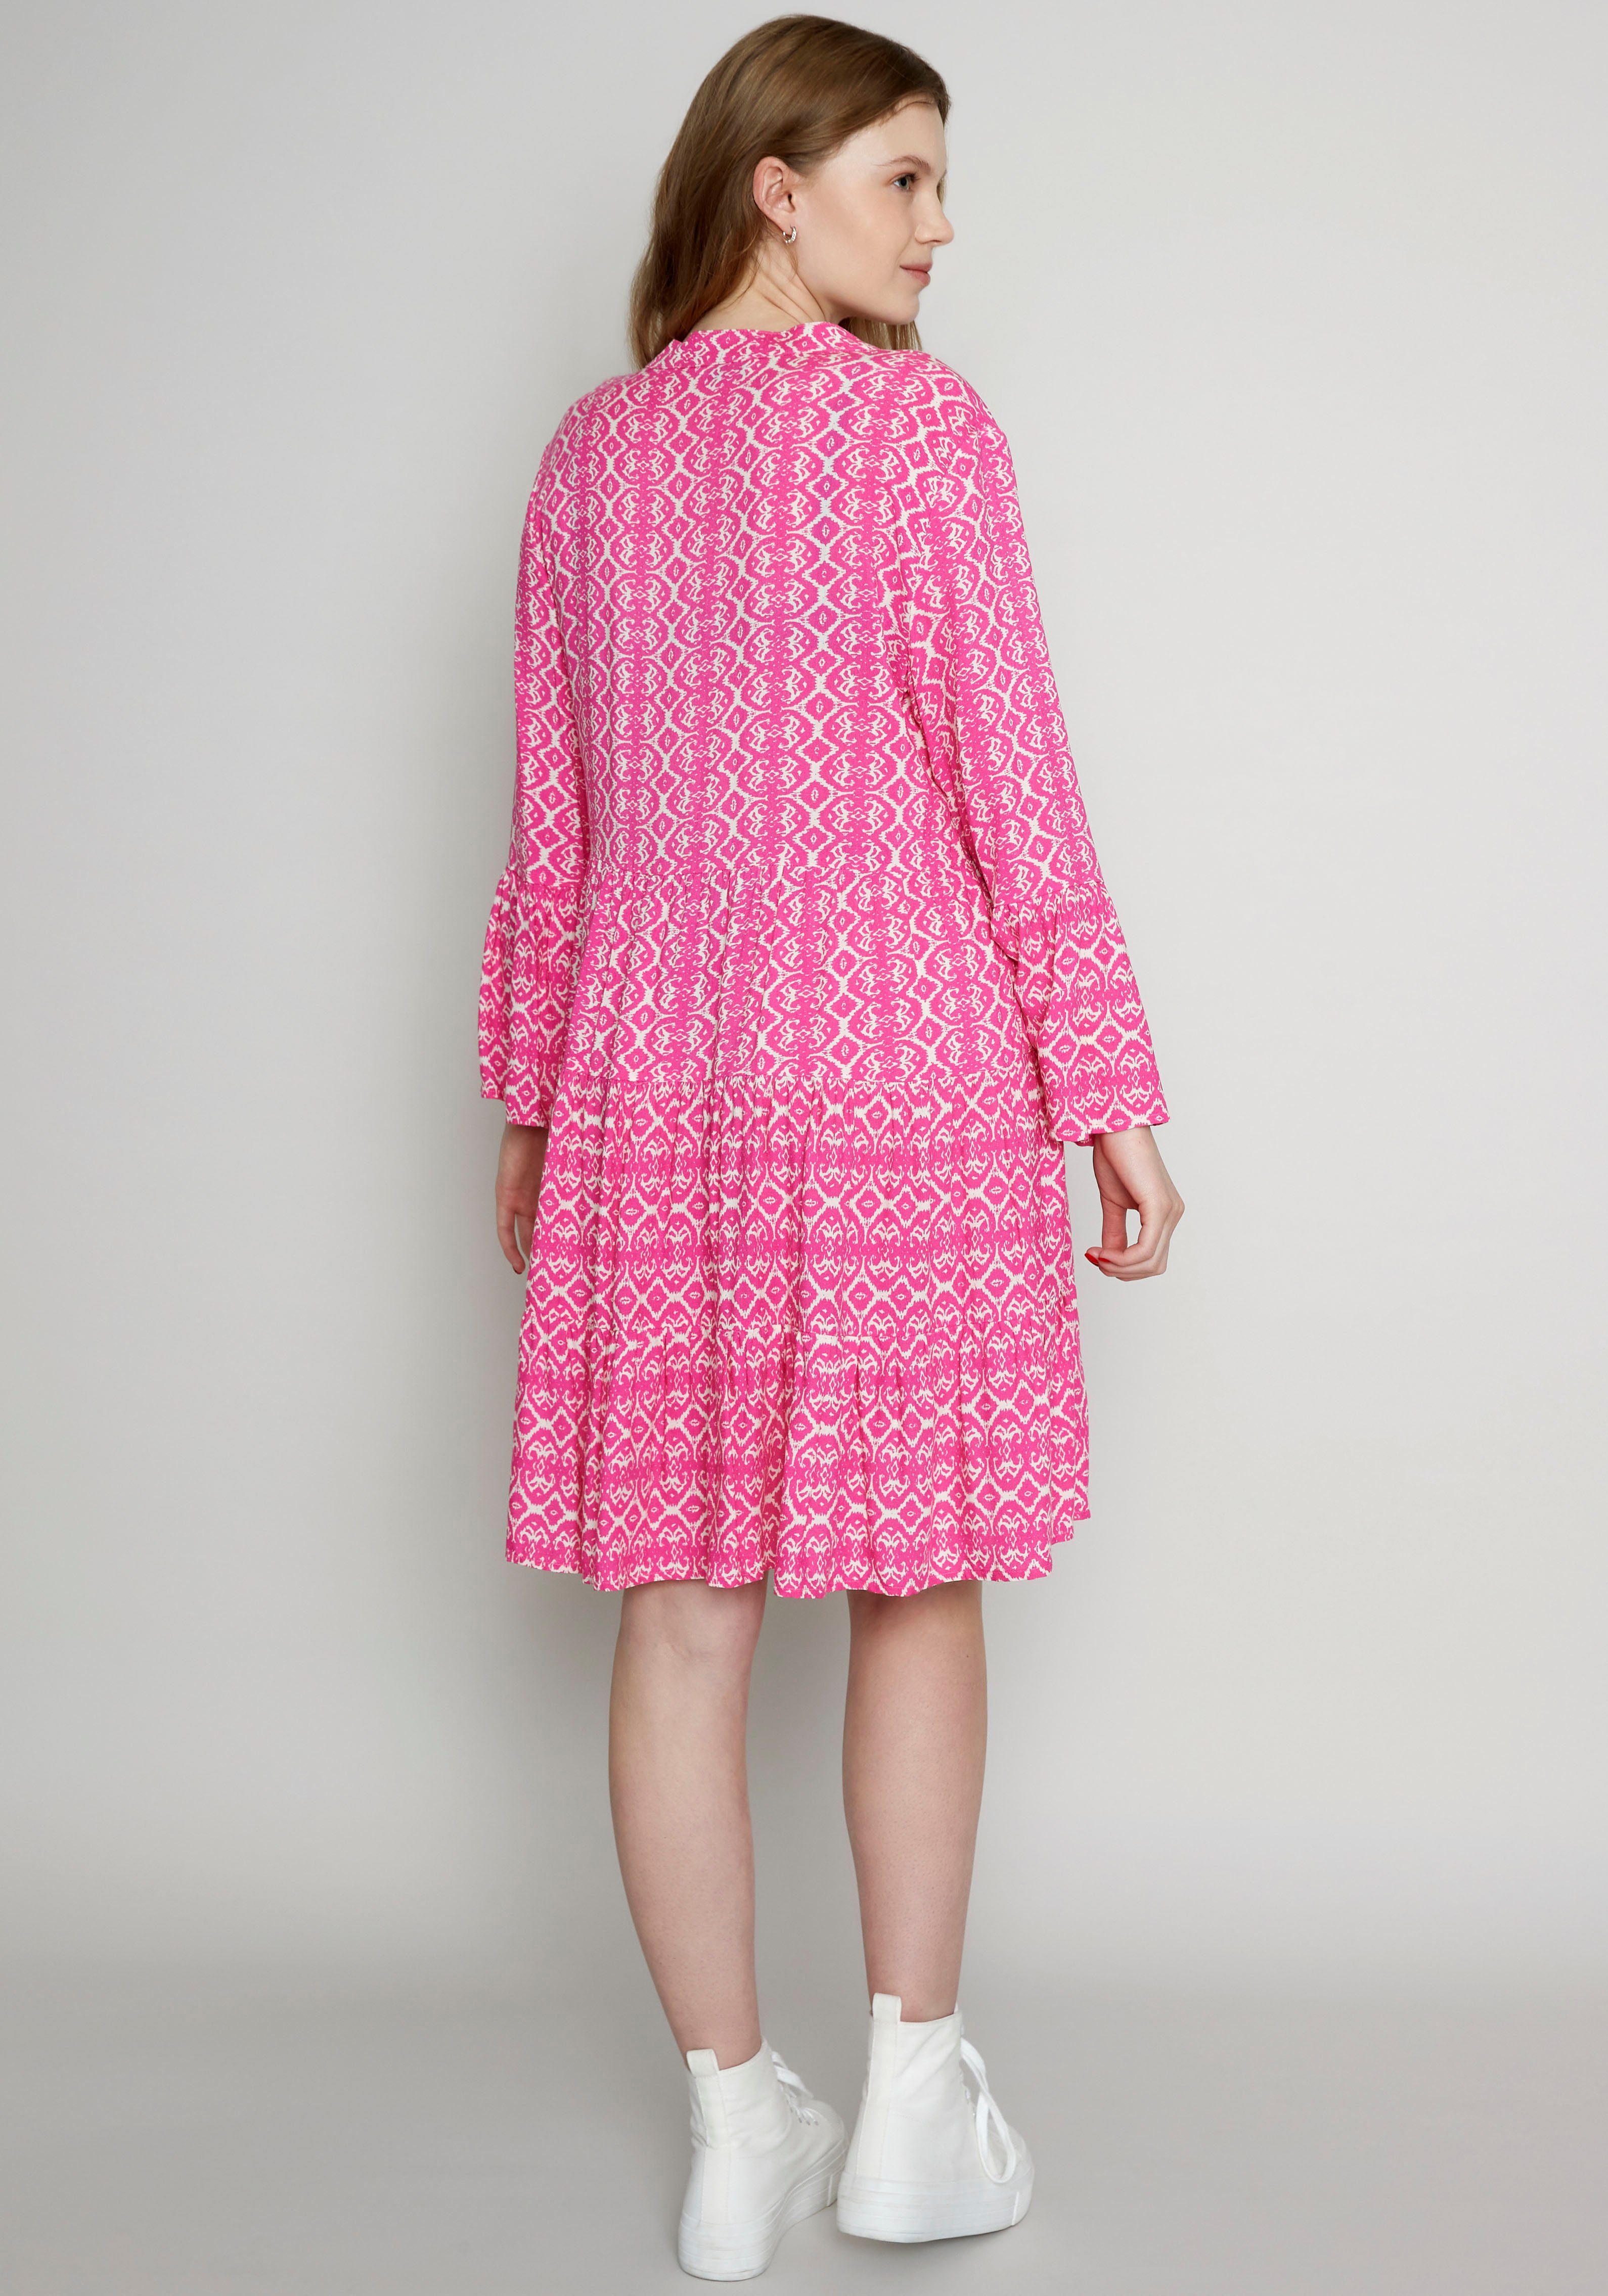 ZABAIONE Sommerkleid Tunika mit Volant Pink Me44lika Style Dress im